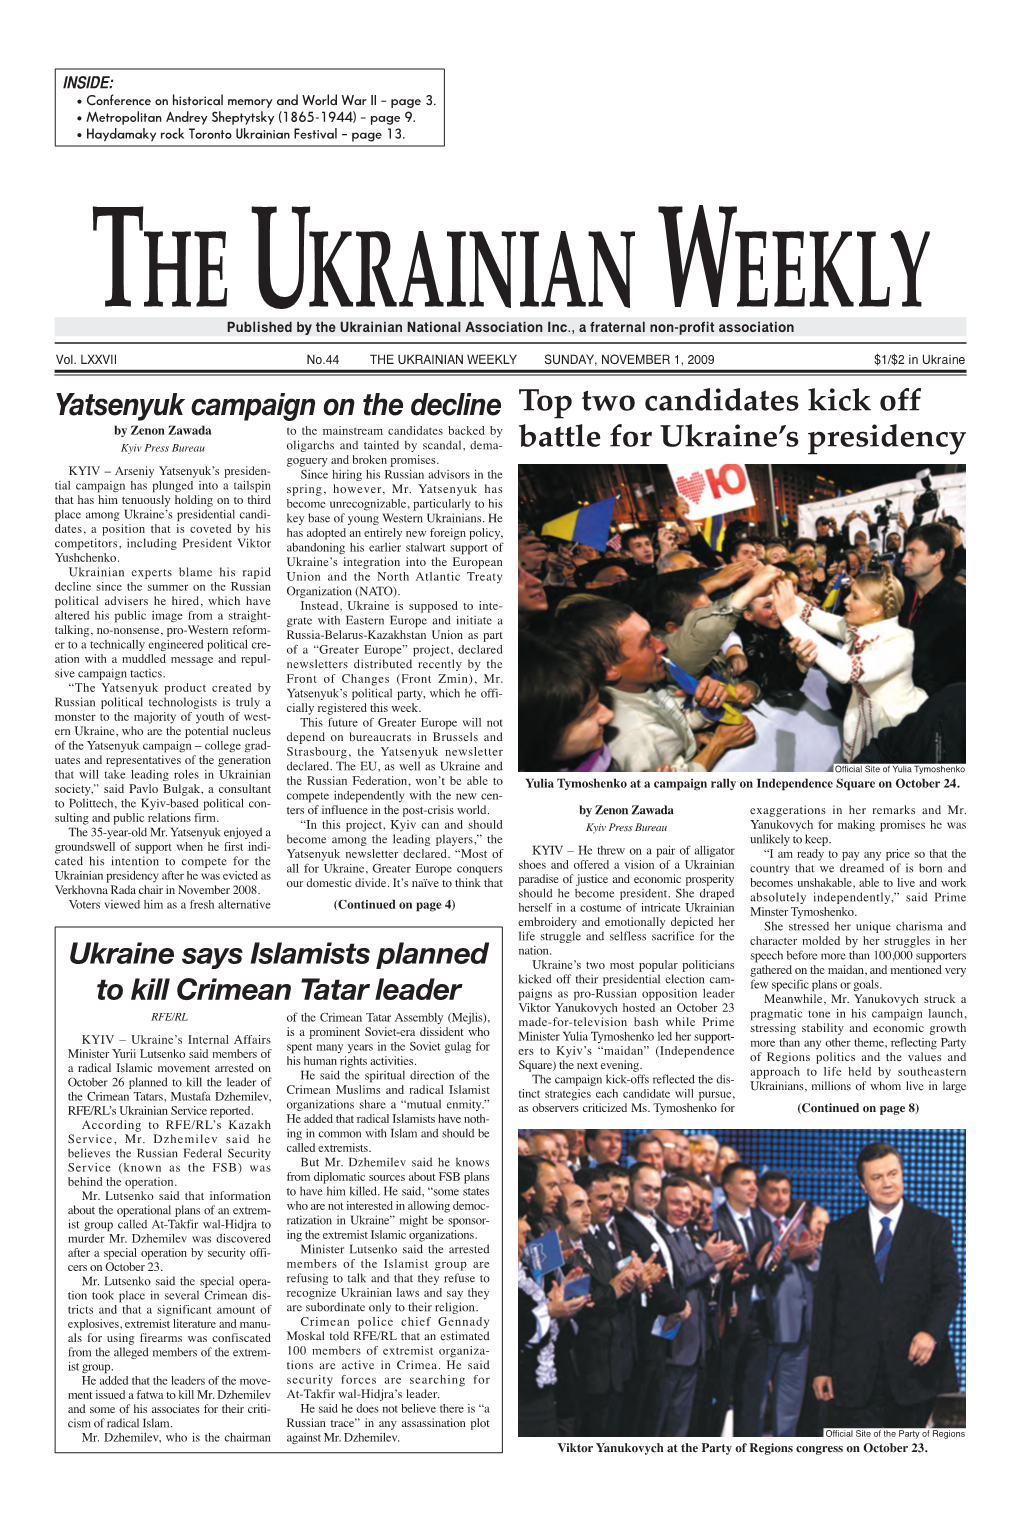 The Ukrainian Weekly 2009, No.44